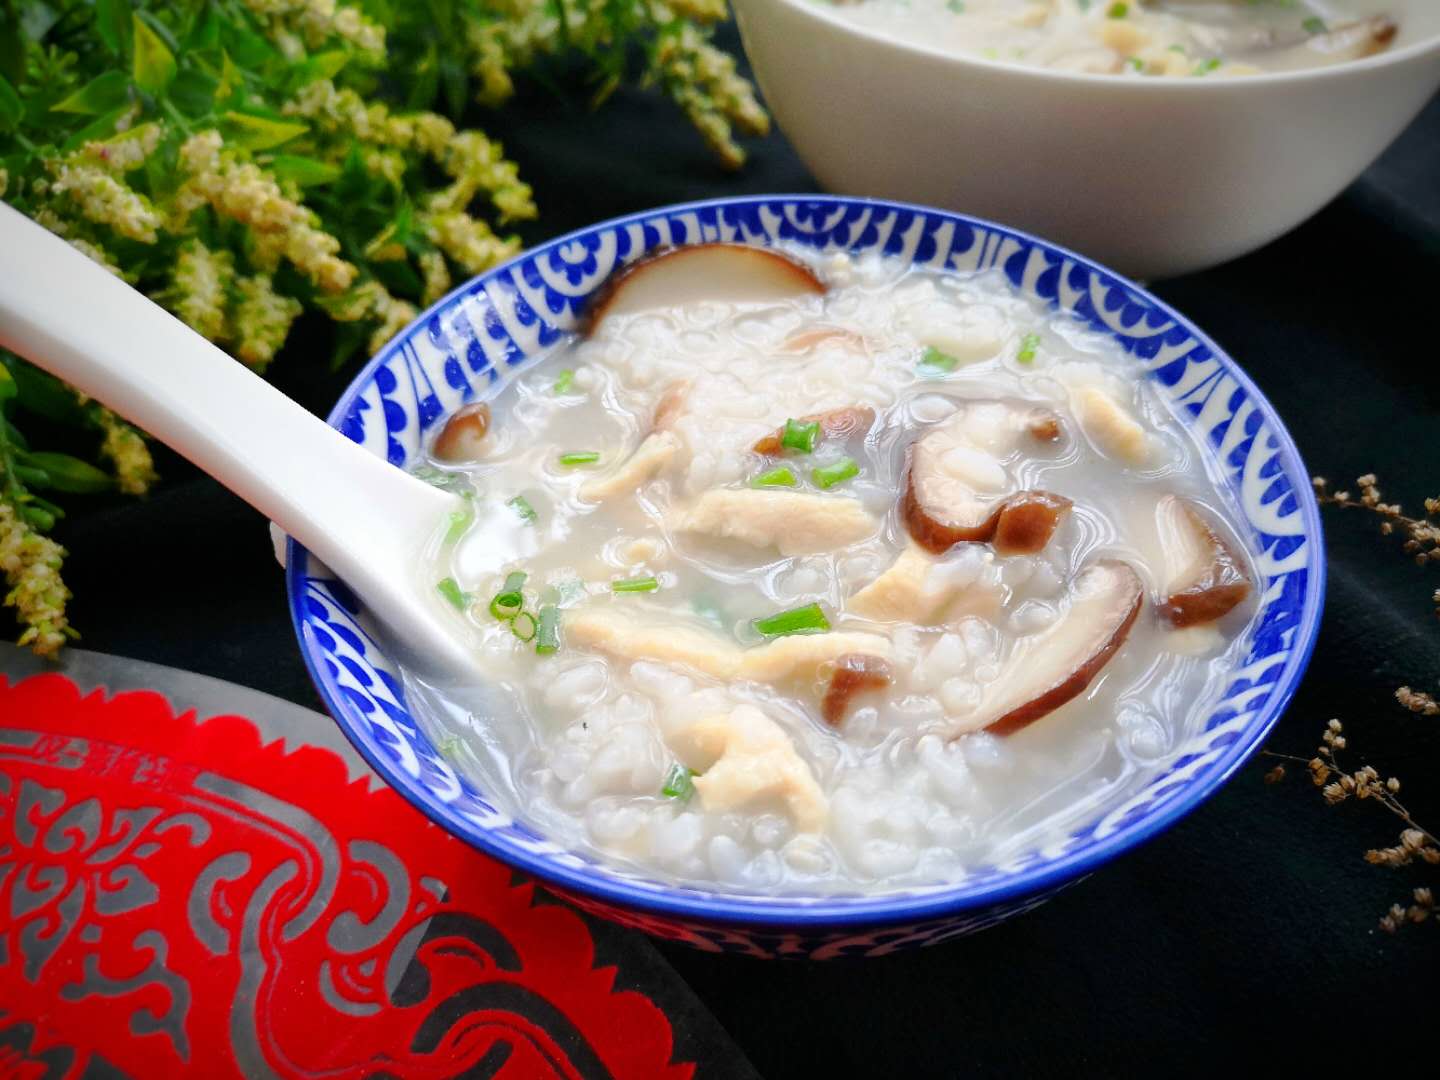 chicken congee with mushroom rice porridge 09